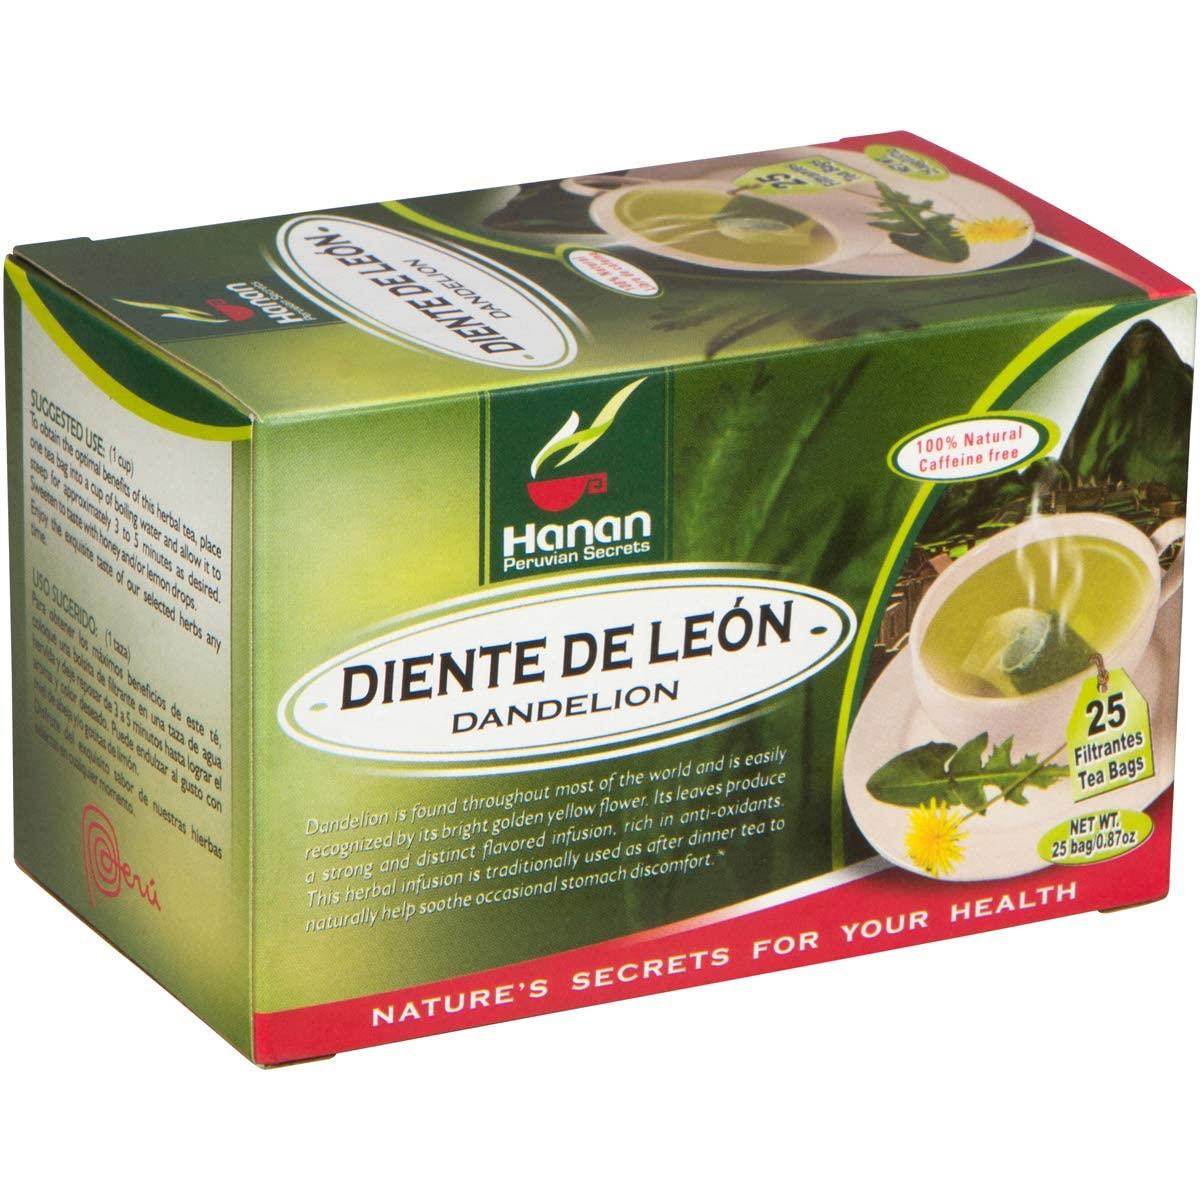 Hanan Dandelion Tea (Diente de Leon) - 25 Tea Bags of All-Natural Dandelion Leaves and Root from Peru, Detox Tea for Digestive Comfort